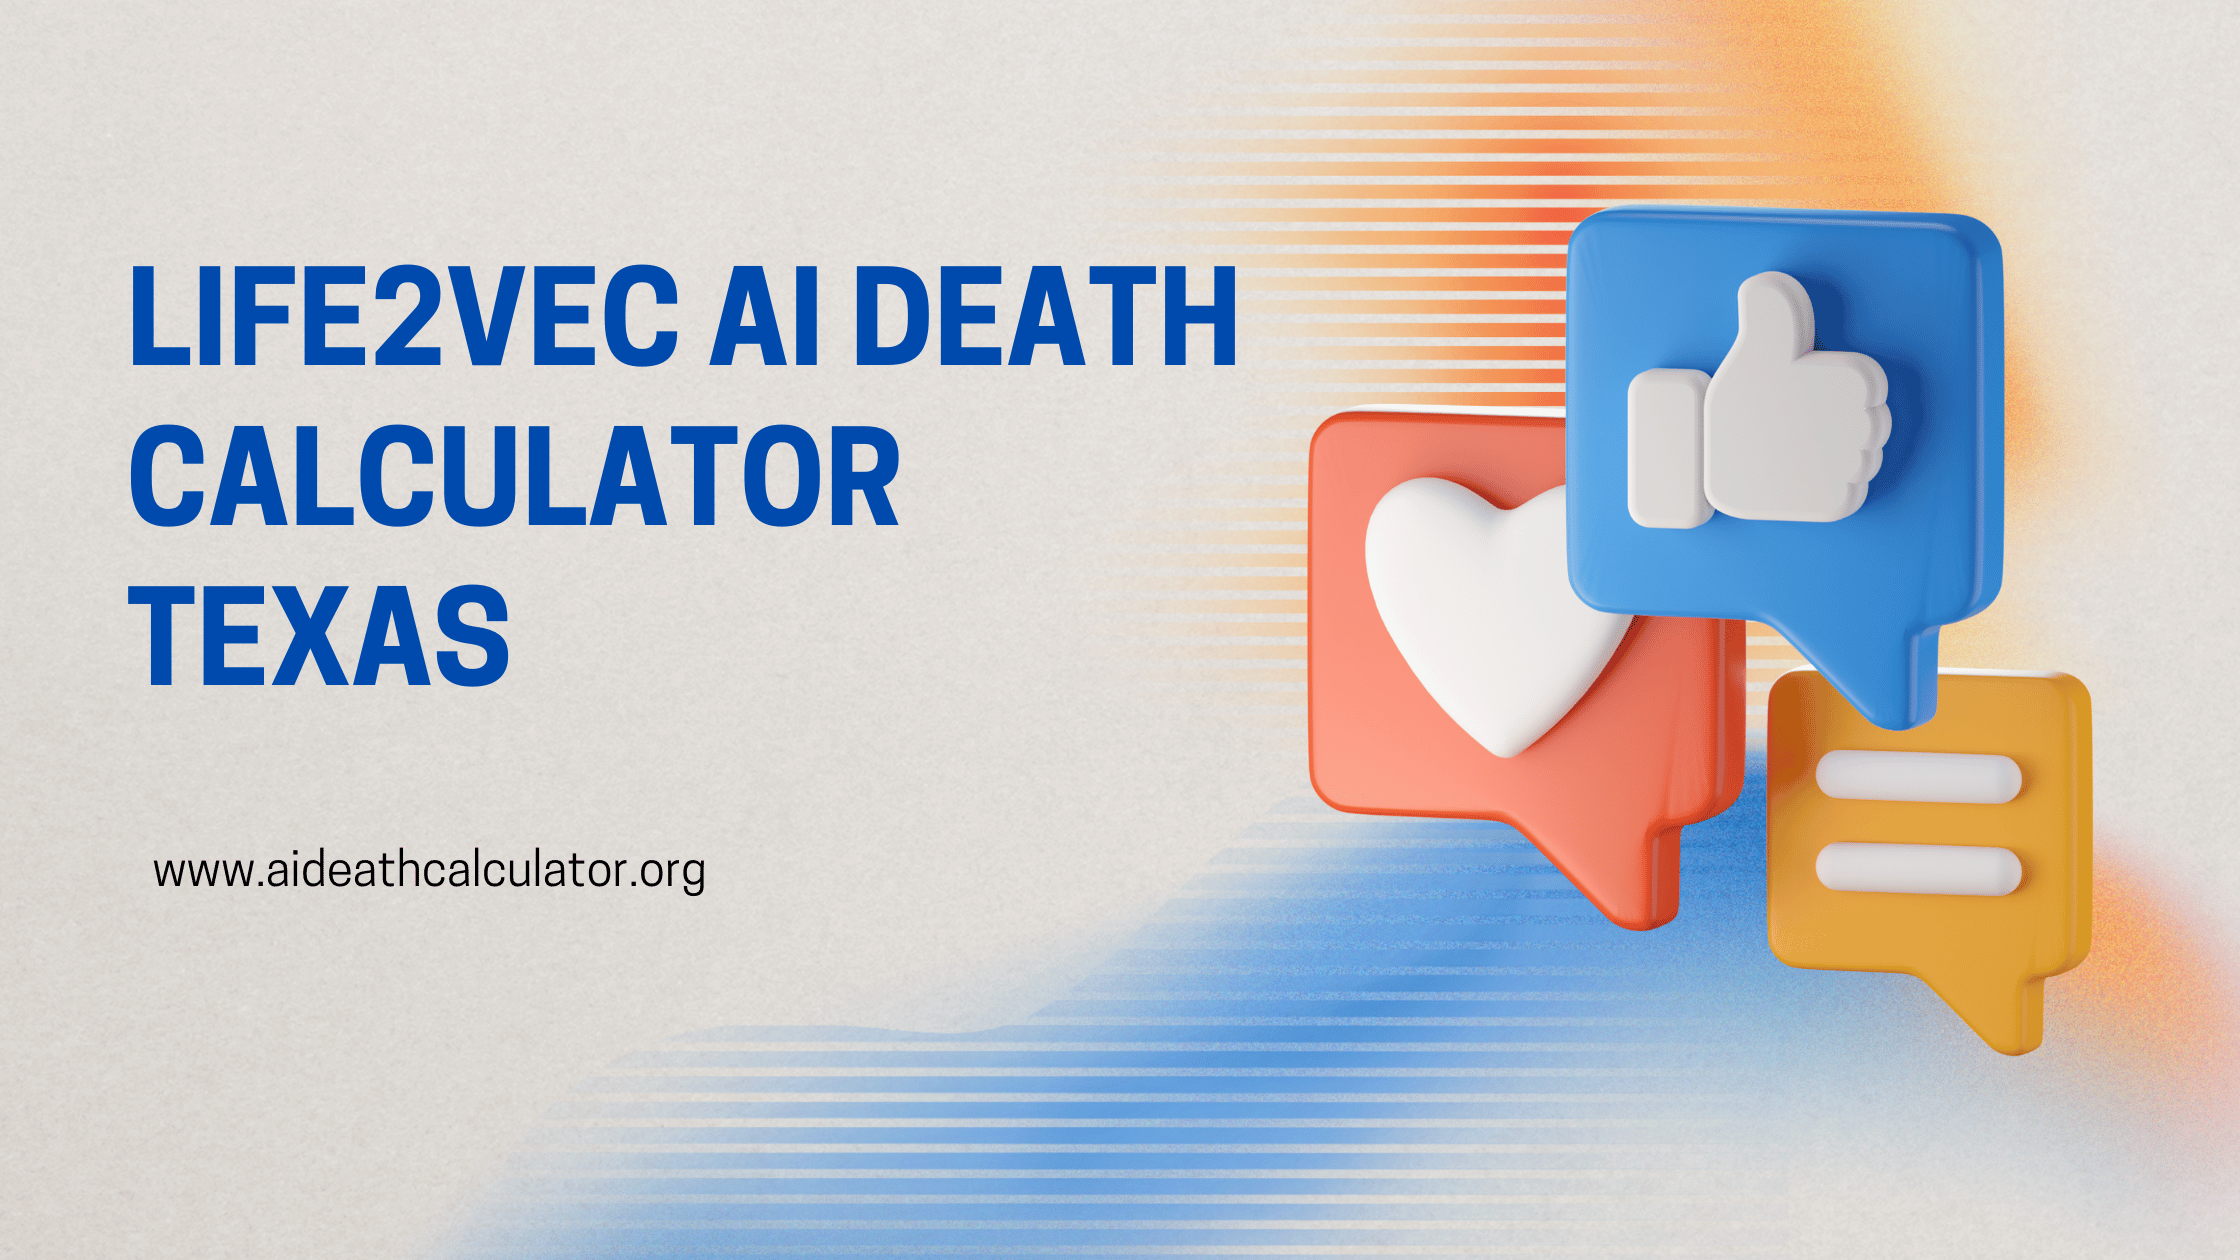 Life2Vec AI Death Calculator Texas